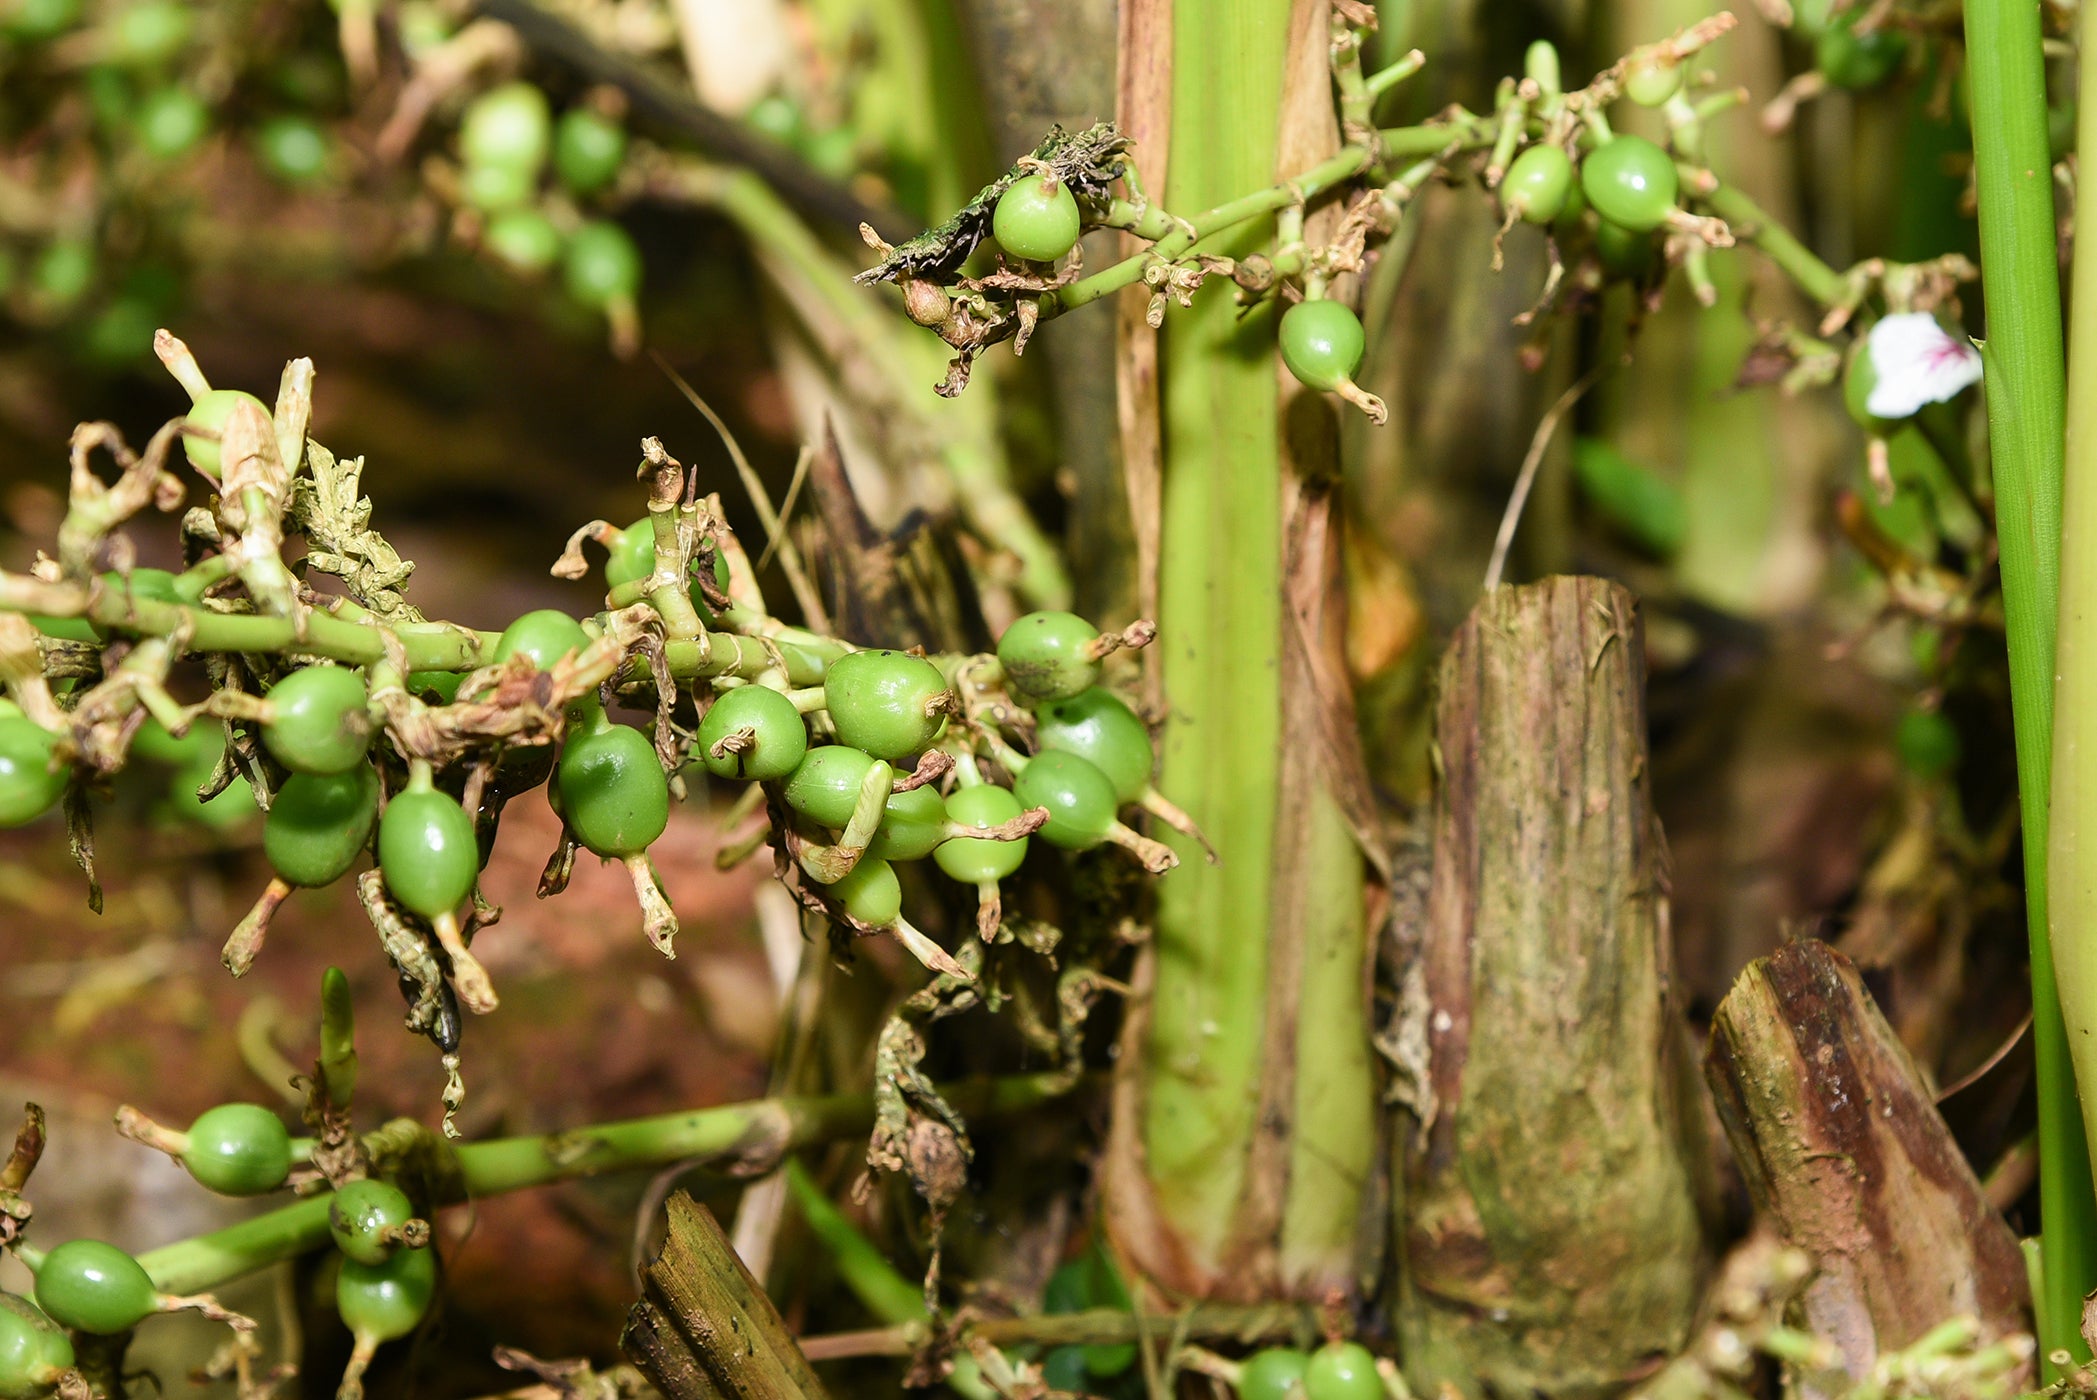 Cardamom spice used in Kekoa Foods baby puree growing on a tree.